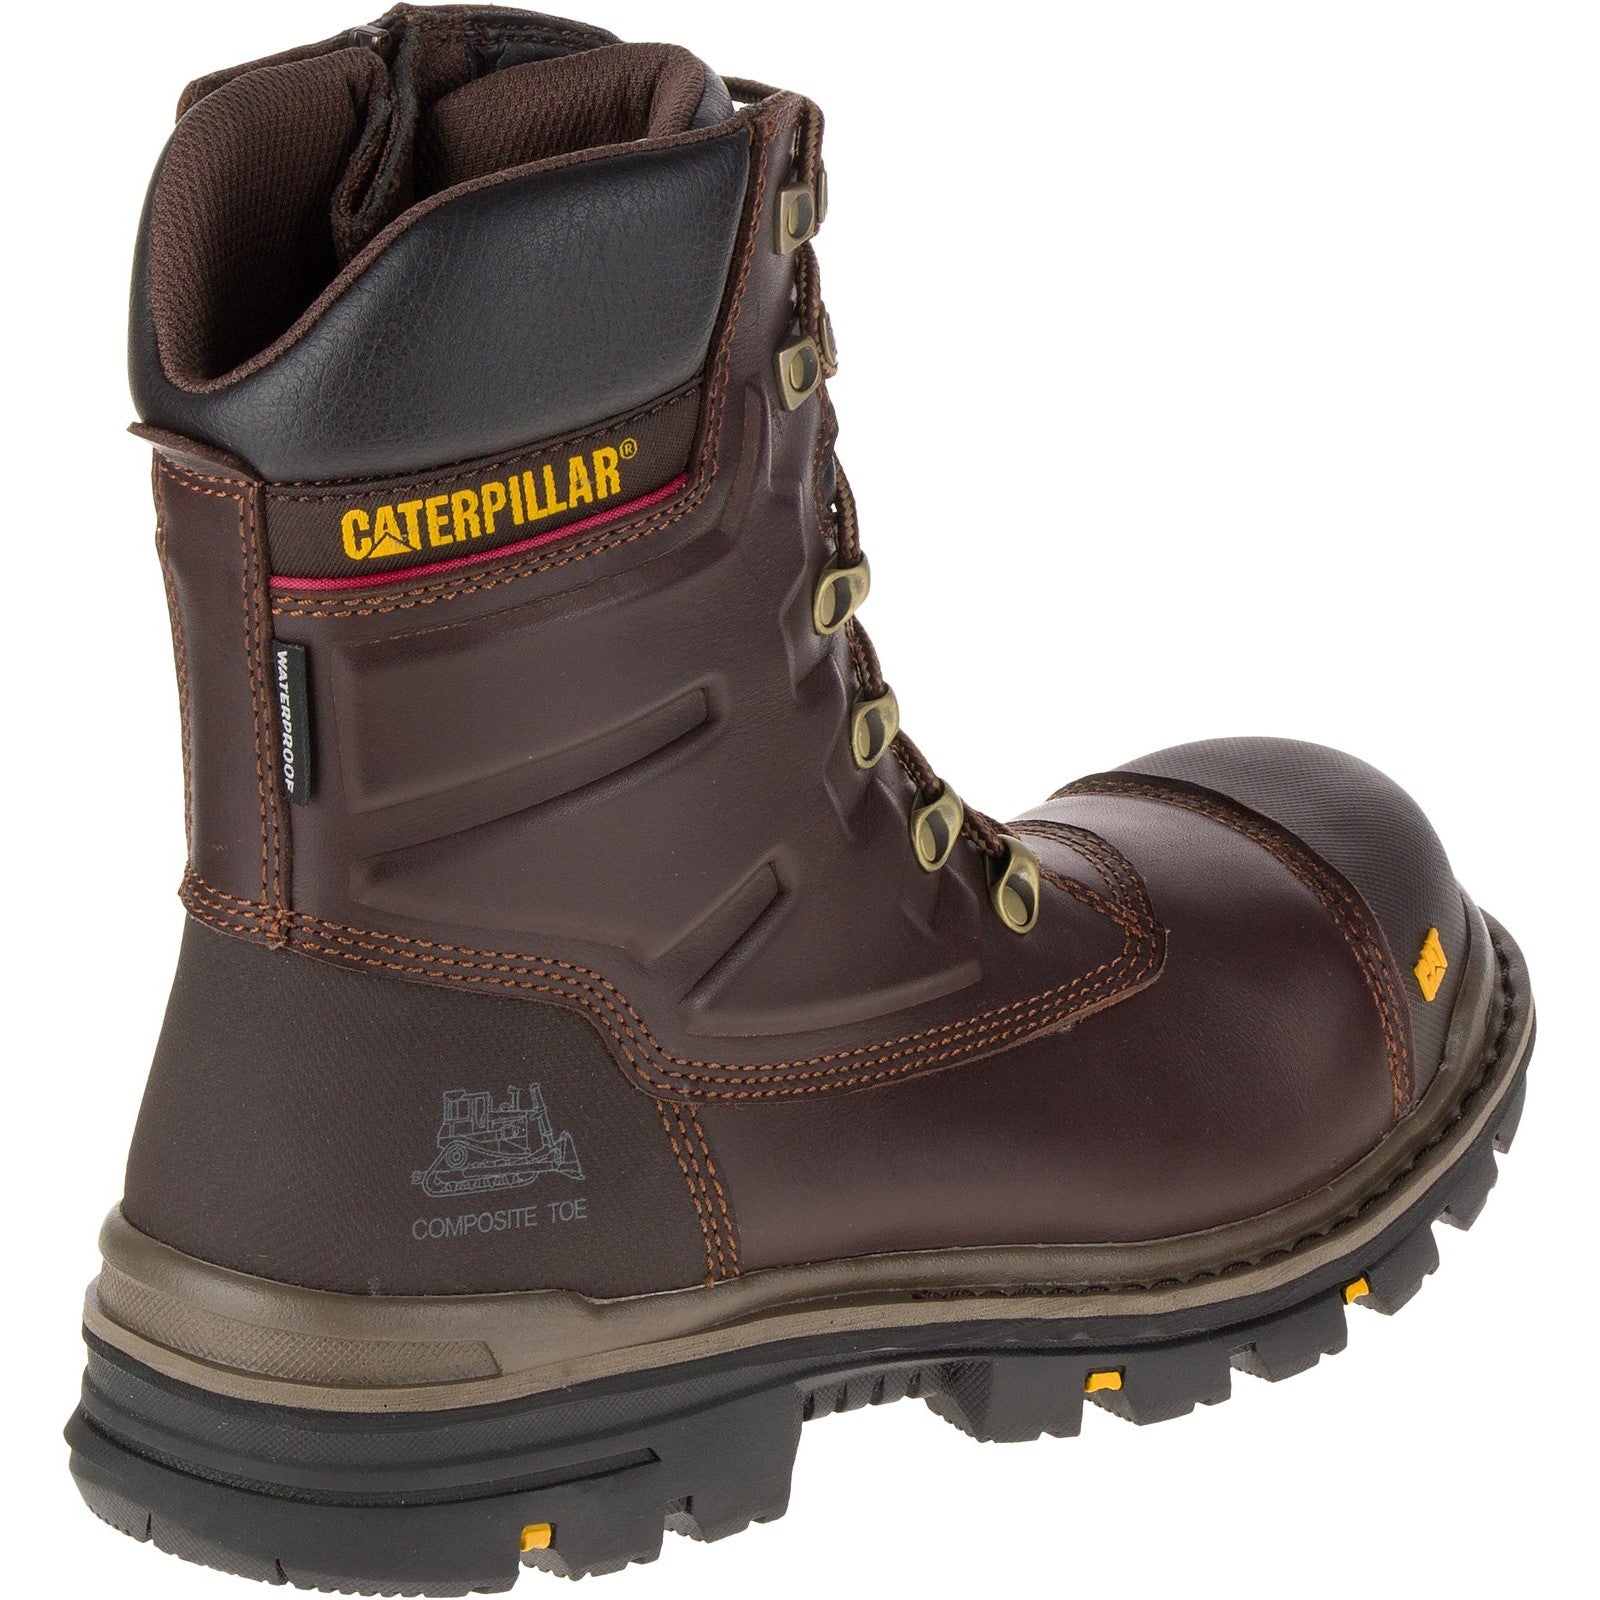 Caterpillar Premier Waterproof S3 Safety Boot in Brown 